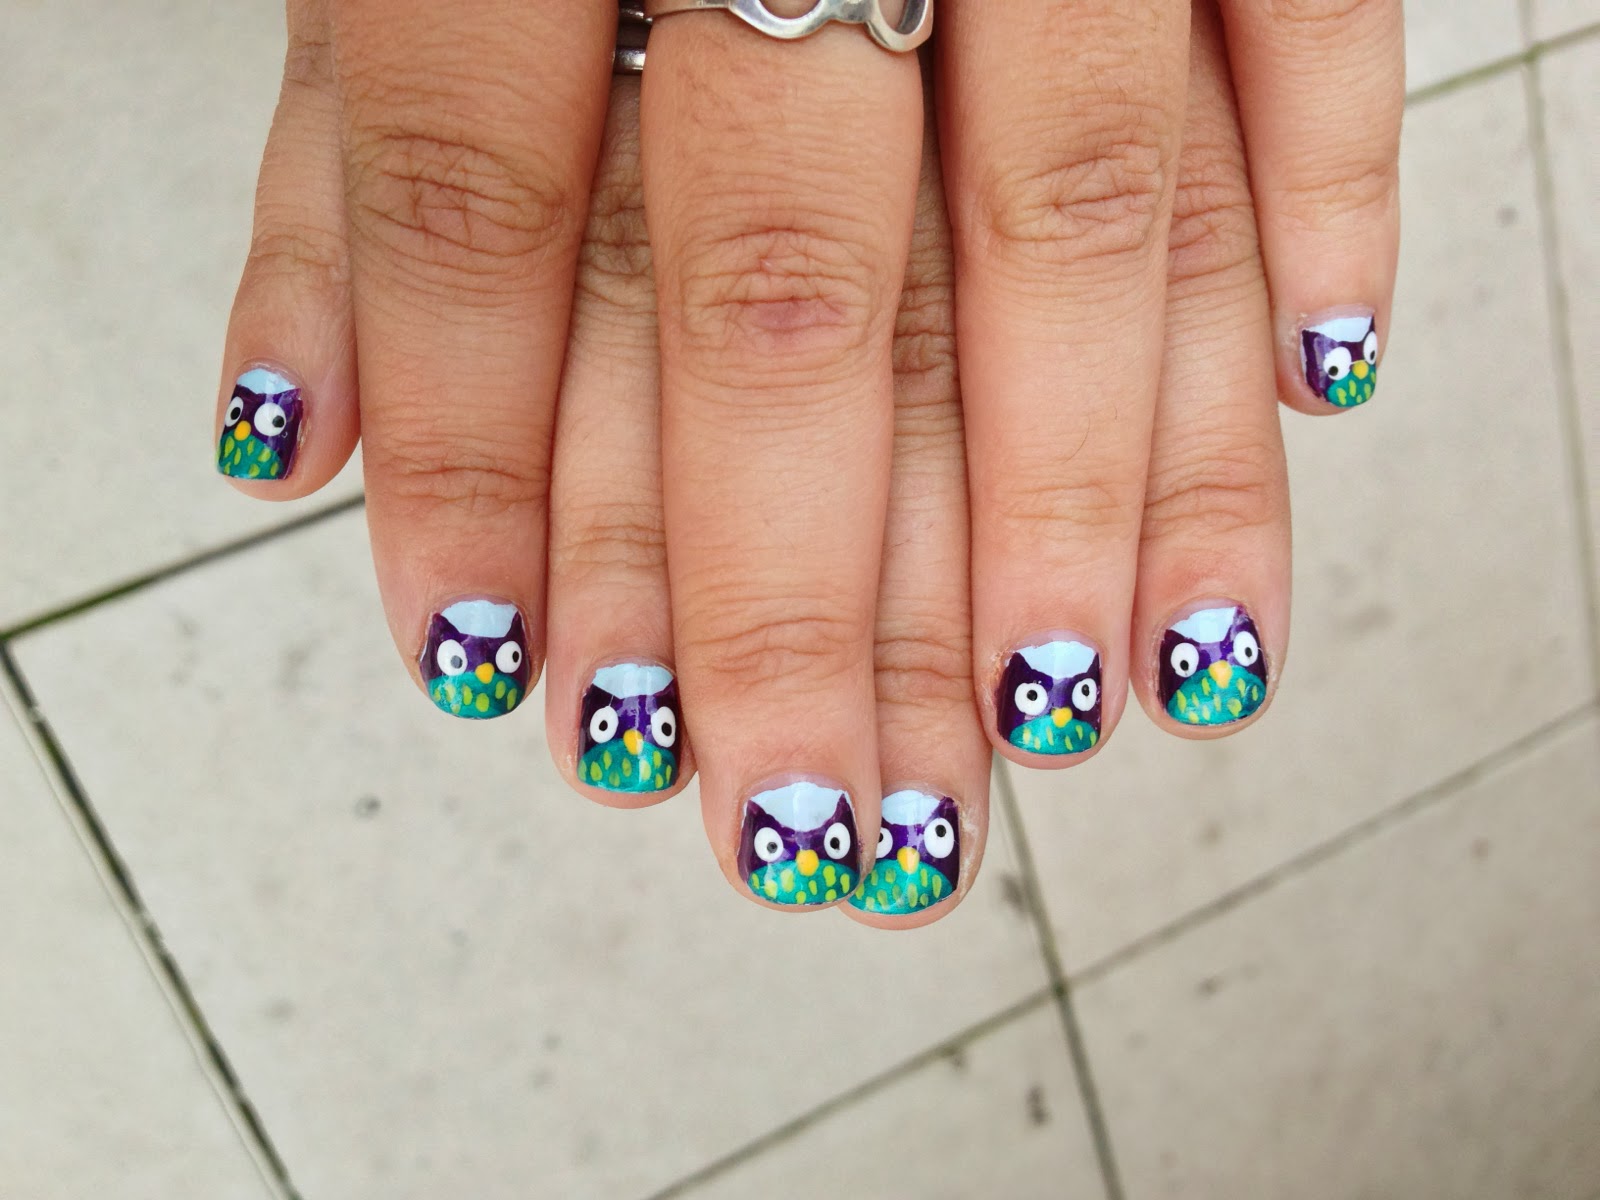 9. Owl Nail Art for Spring on Pinterest - wide 5